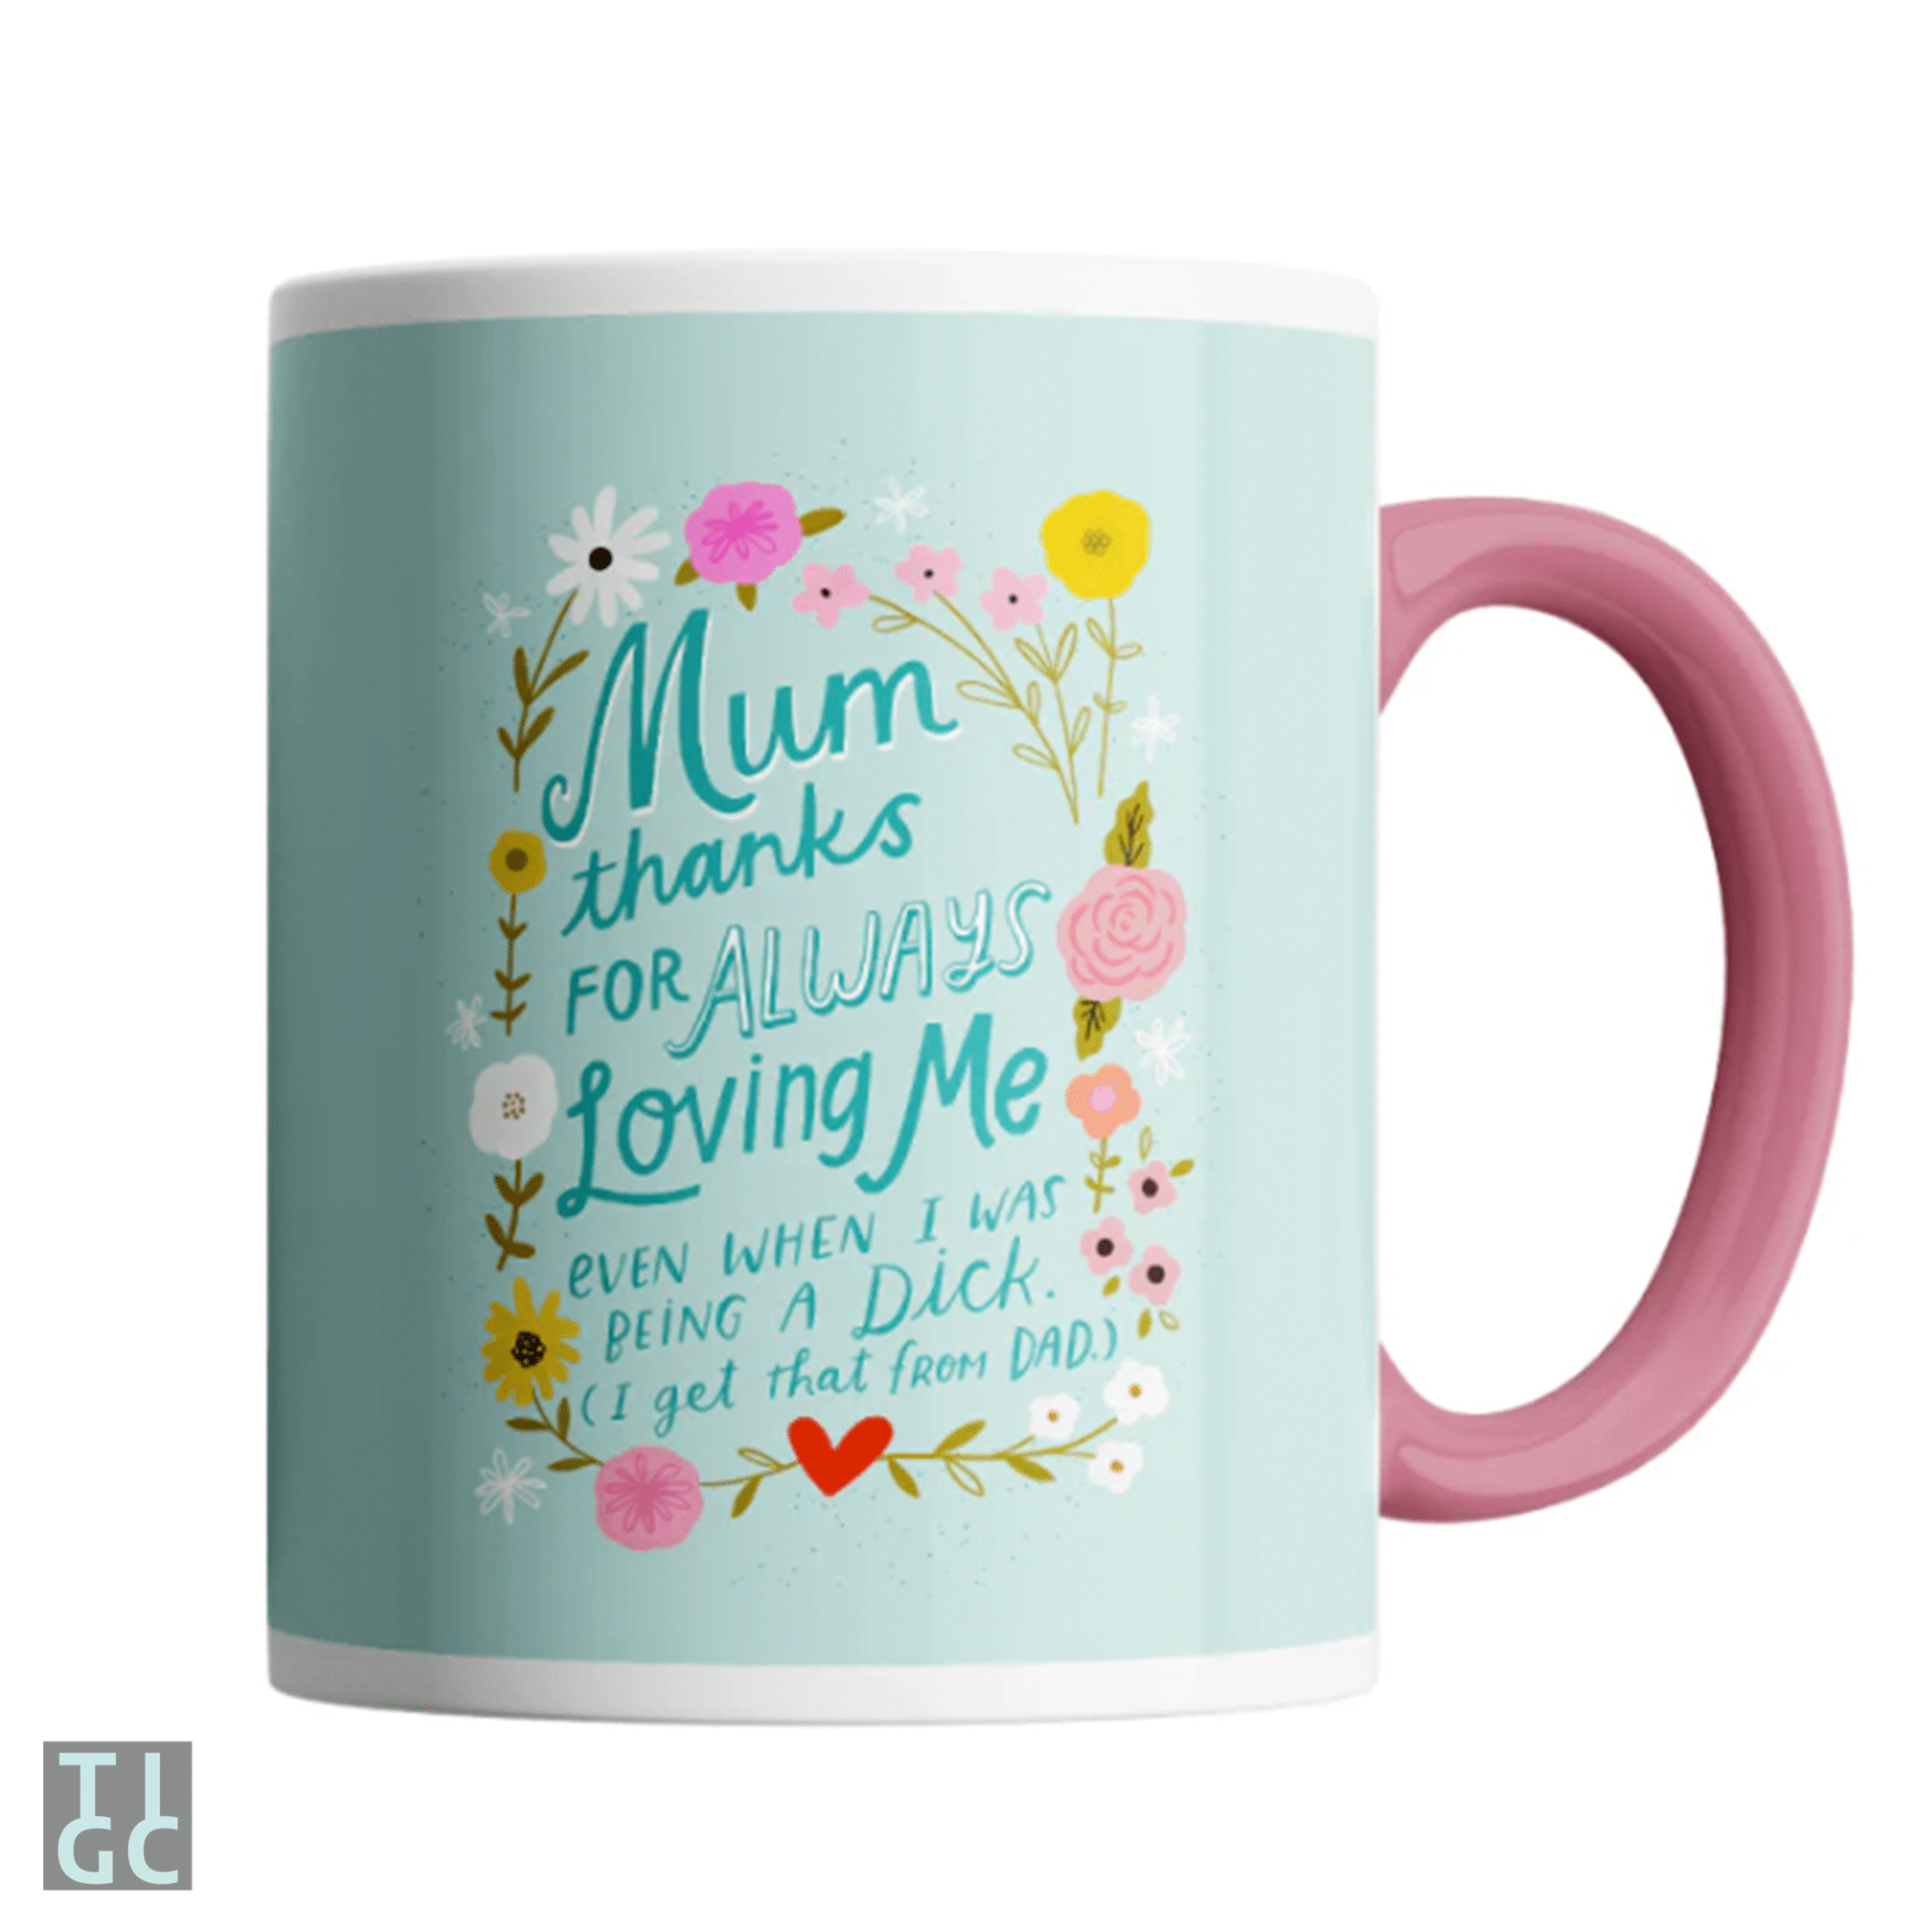 Mum thanks for always loving me mug